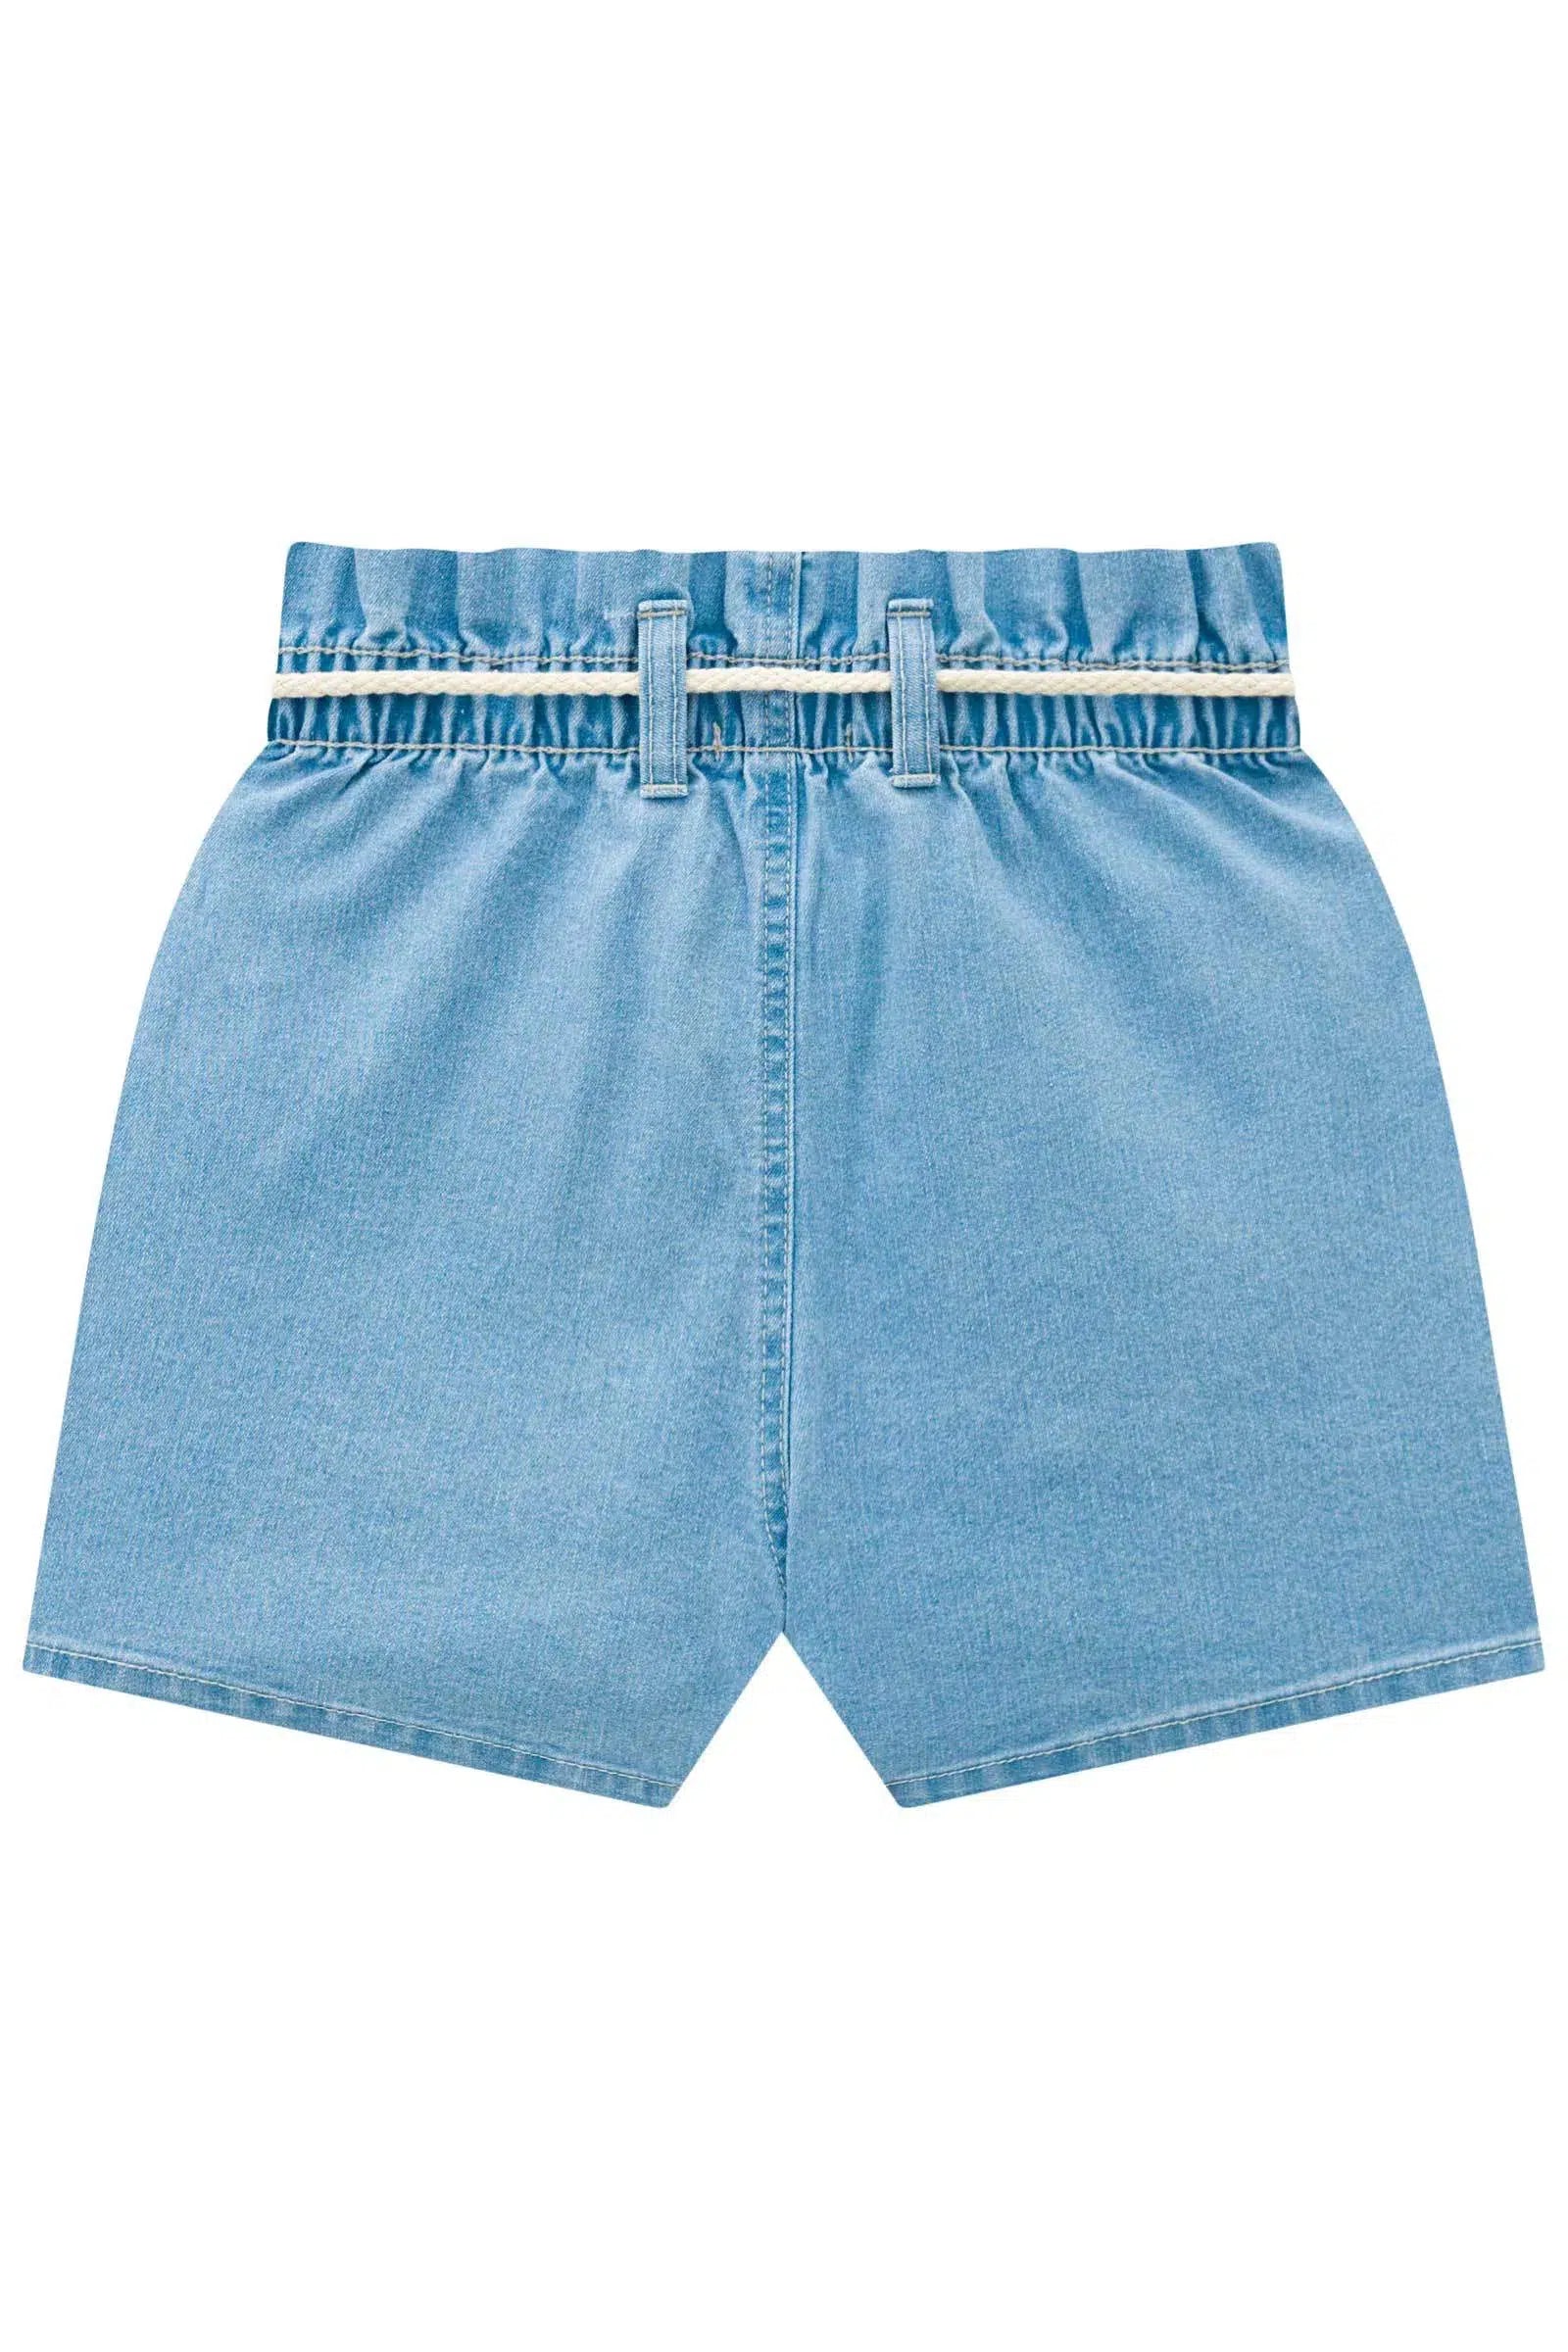 Shorts em Jeans Bellini 72777 Lilimoon